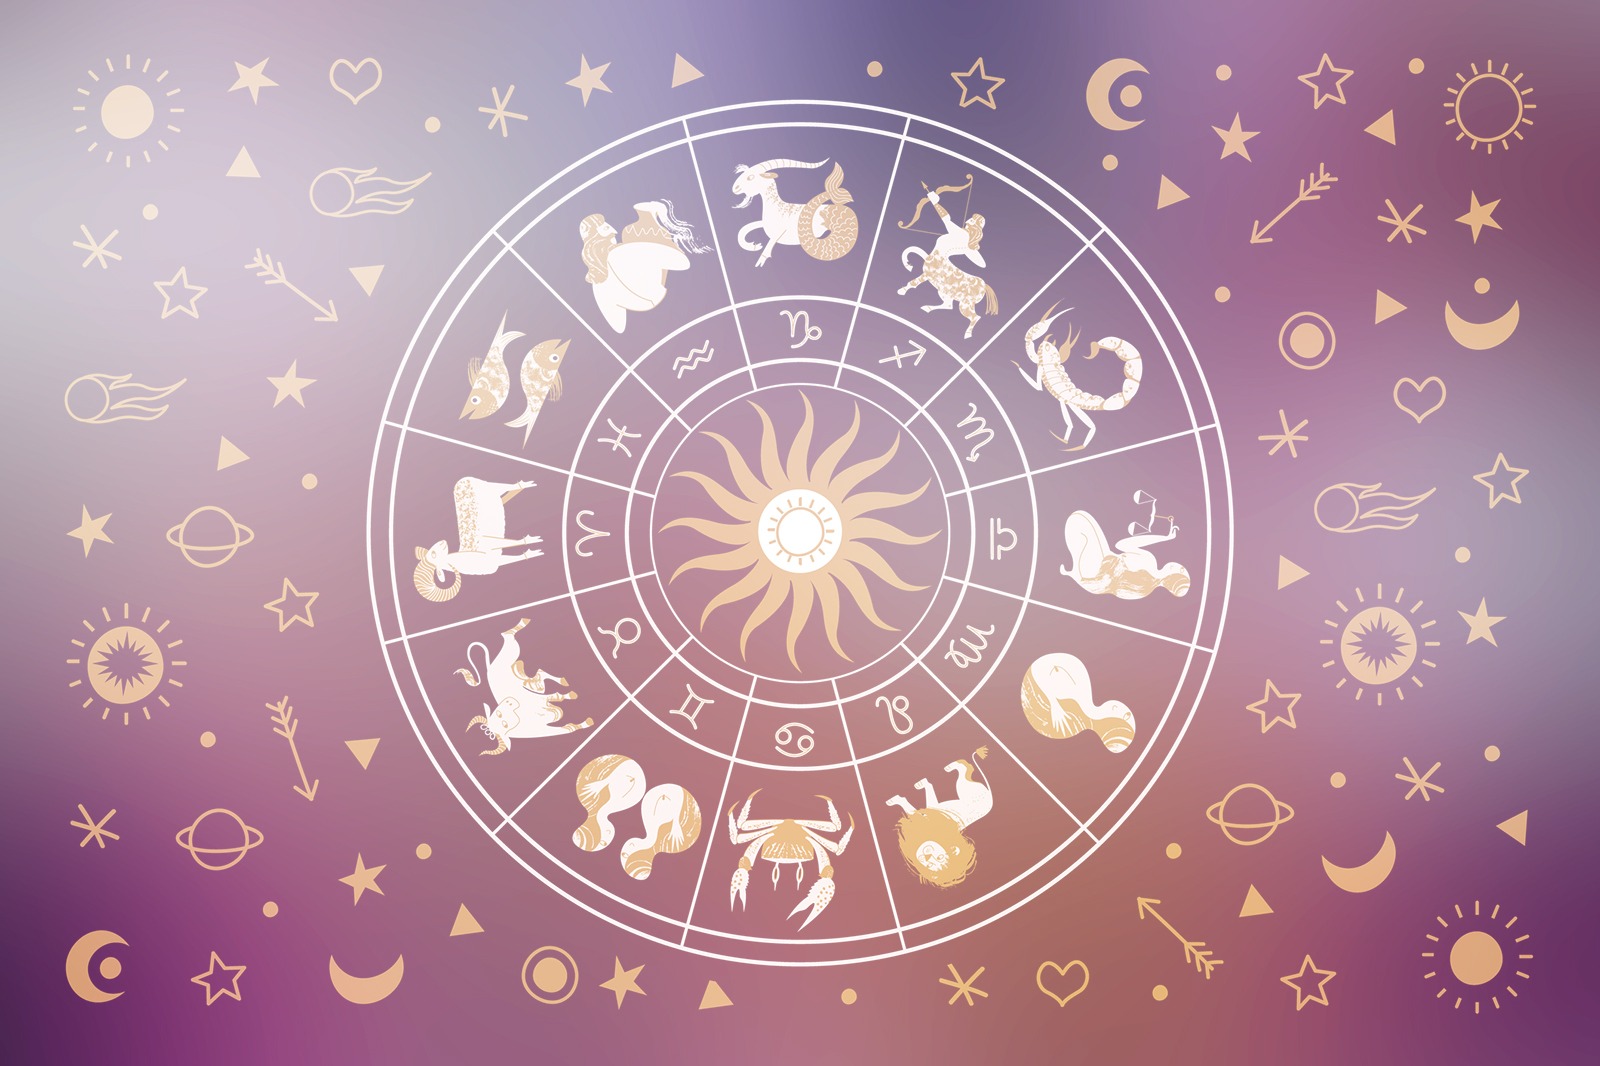 Horoscope today